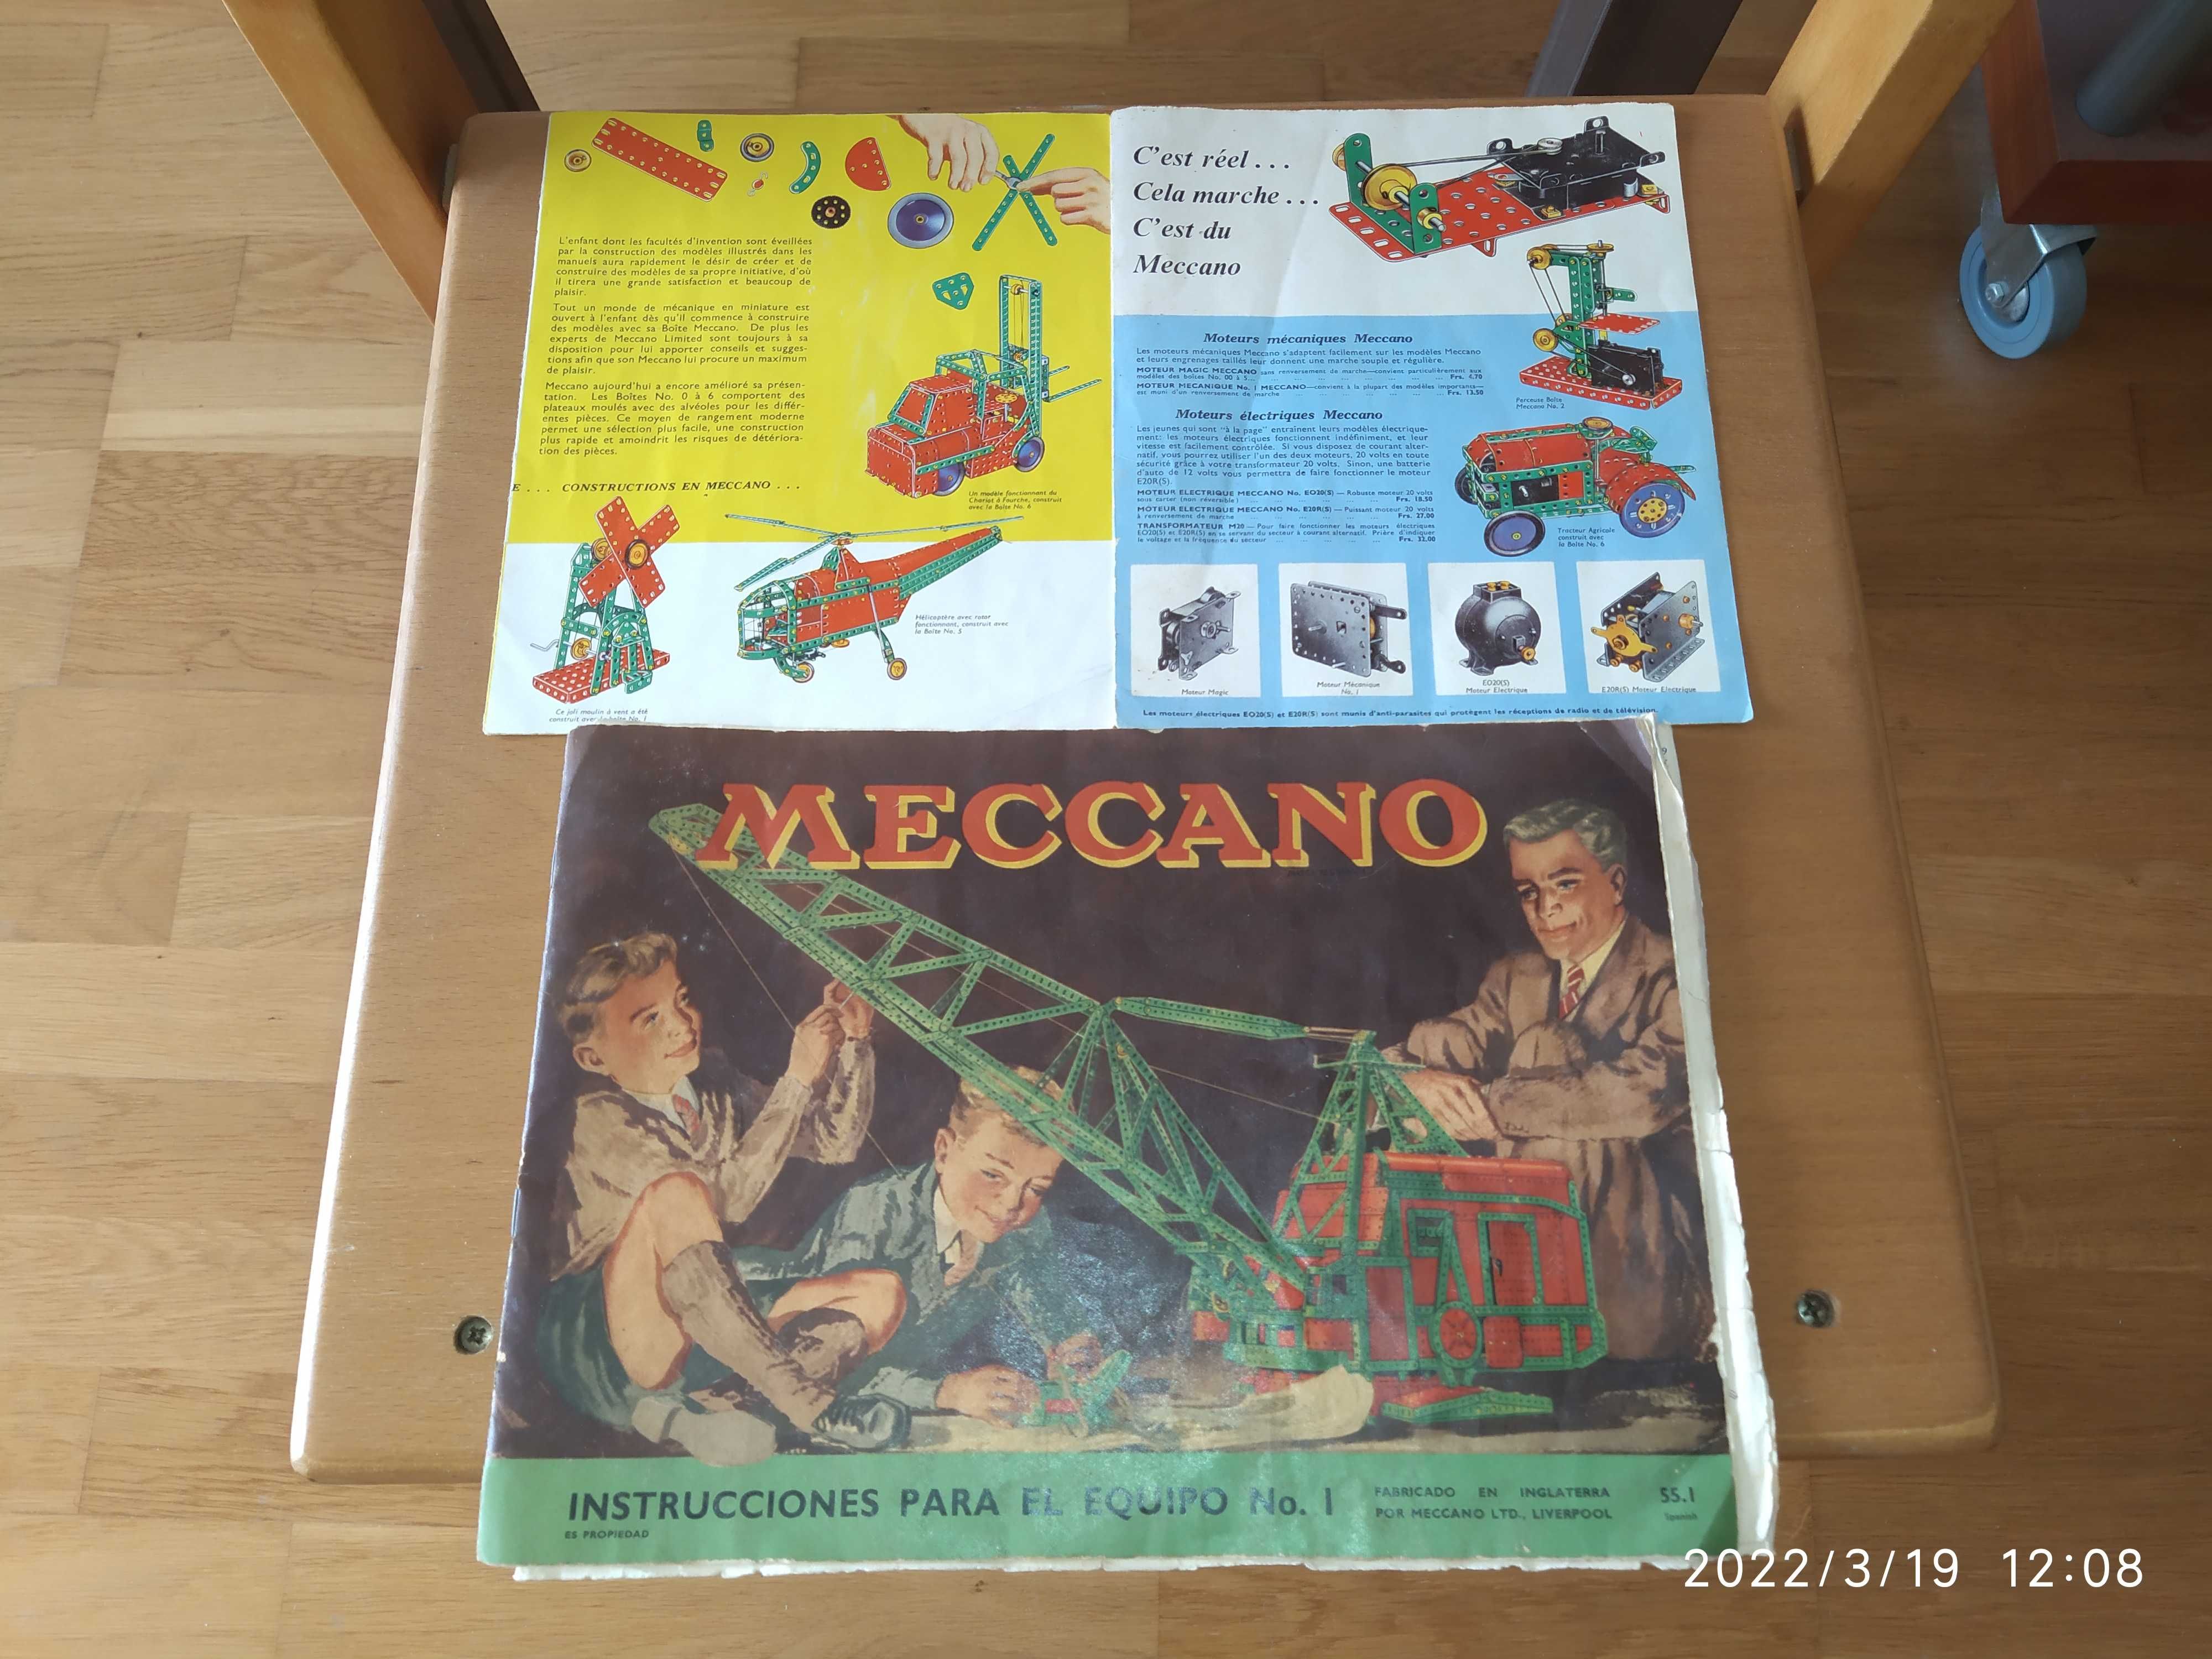 ##pack Meccano nº1 & nº2 incompleto com manual (vintage/em francês)##